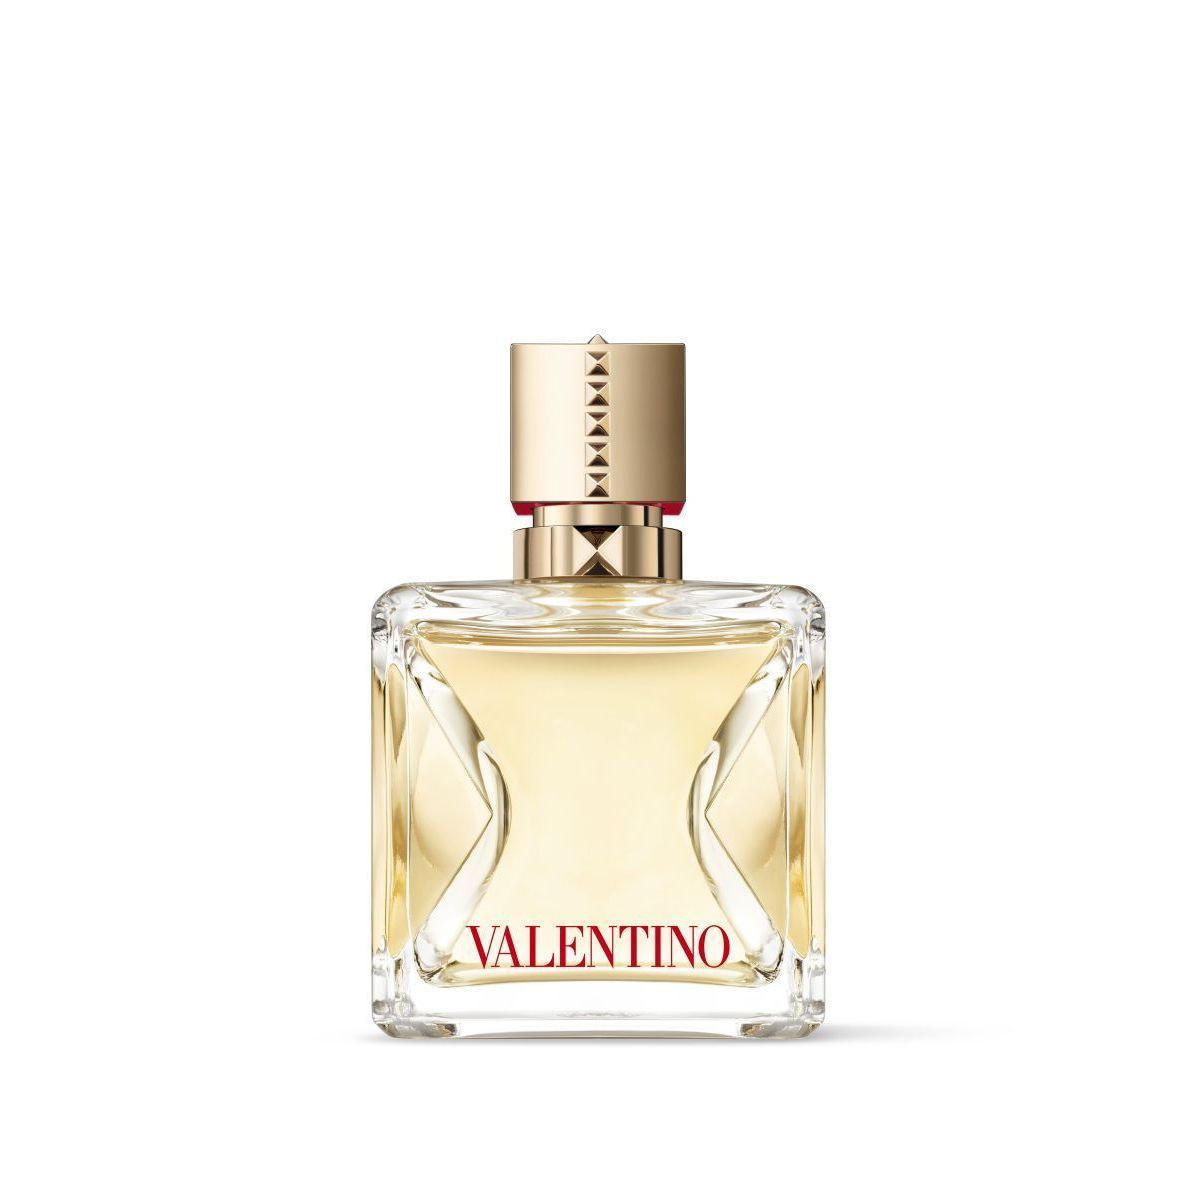 Valentino Voce Viva Eau De Parfum 100 ml.